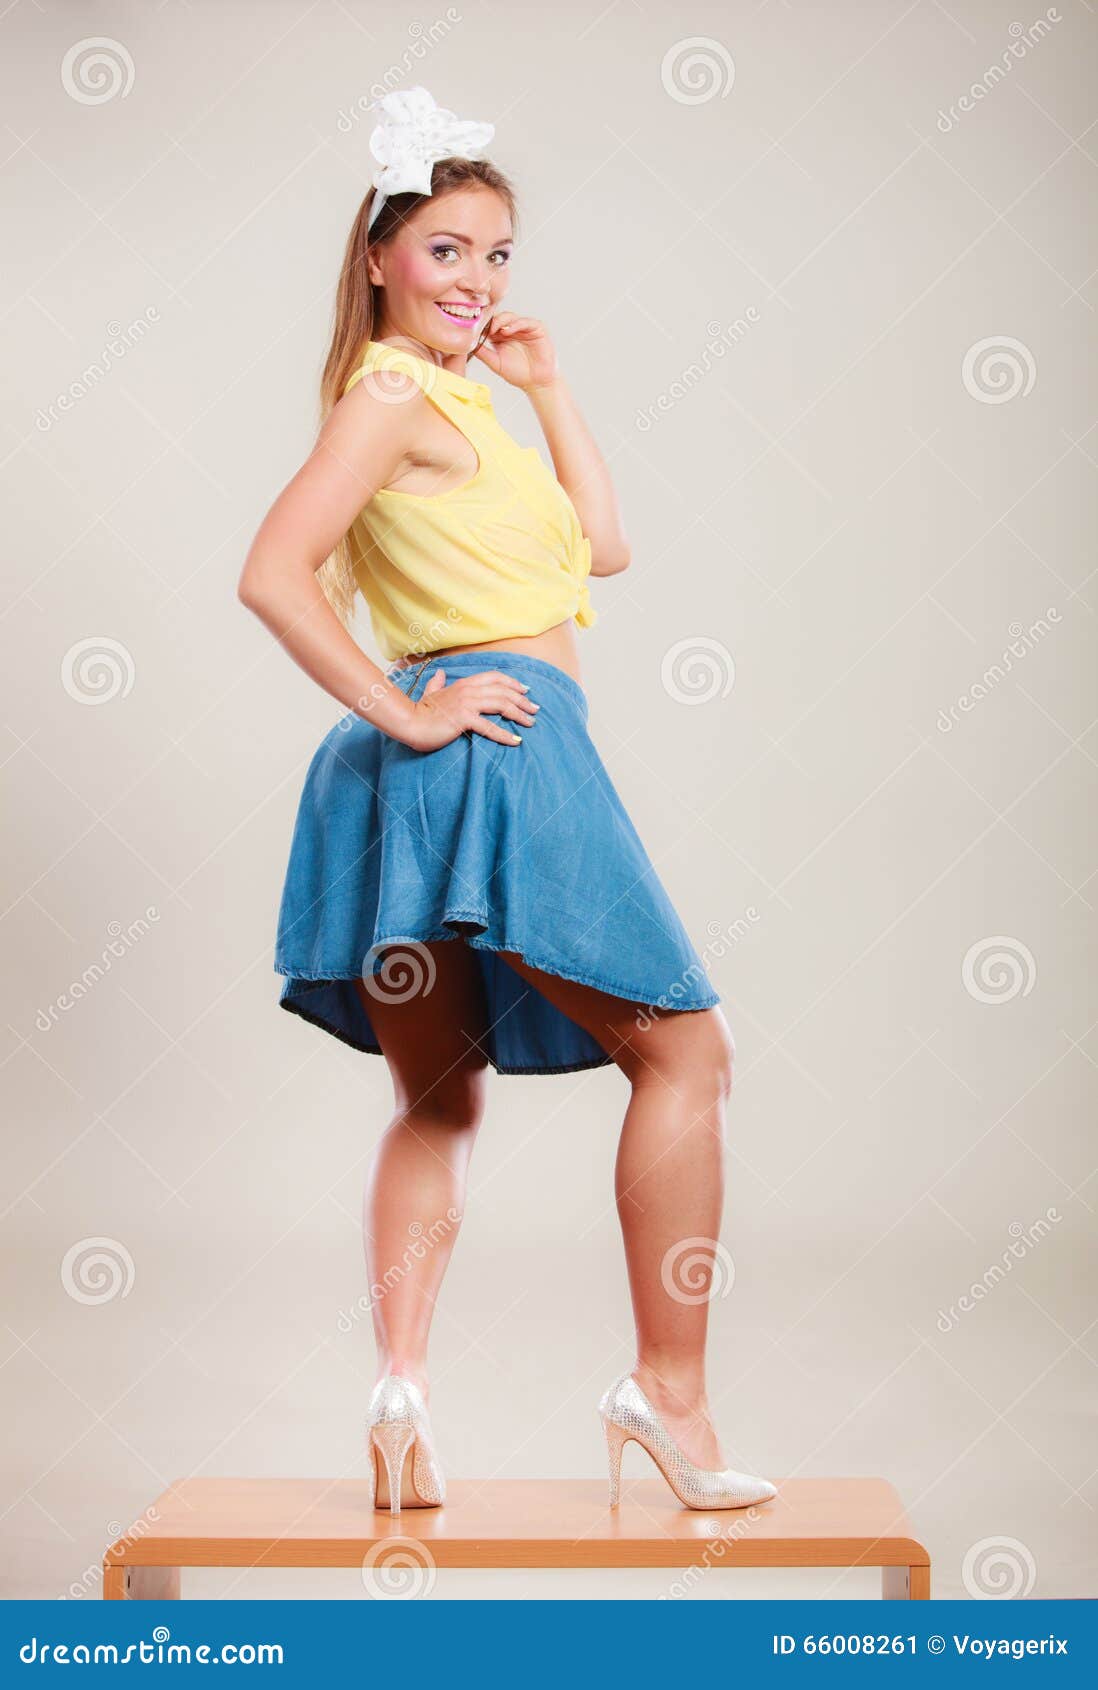 Seductive Pin Up Woman Girl Dancing On Table Stock Image Image Of Pinup Young 66008261 